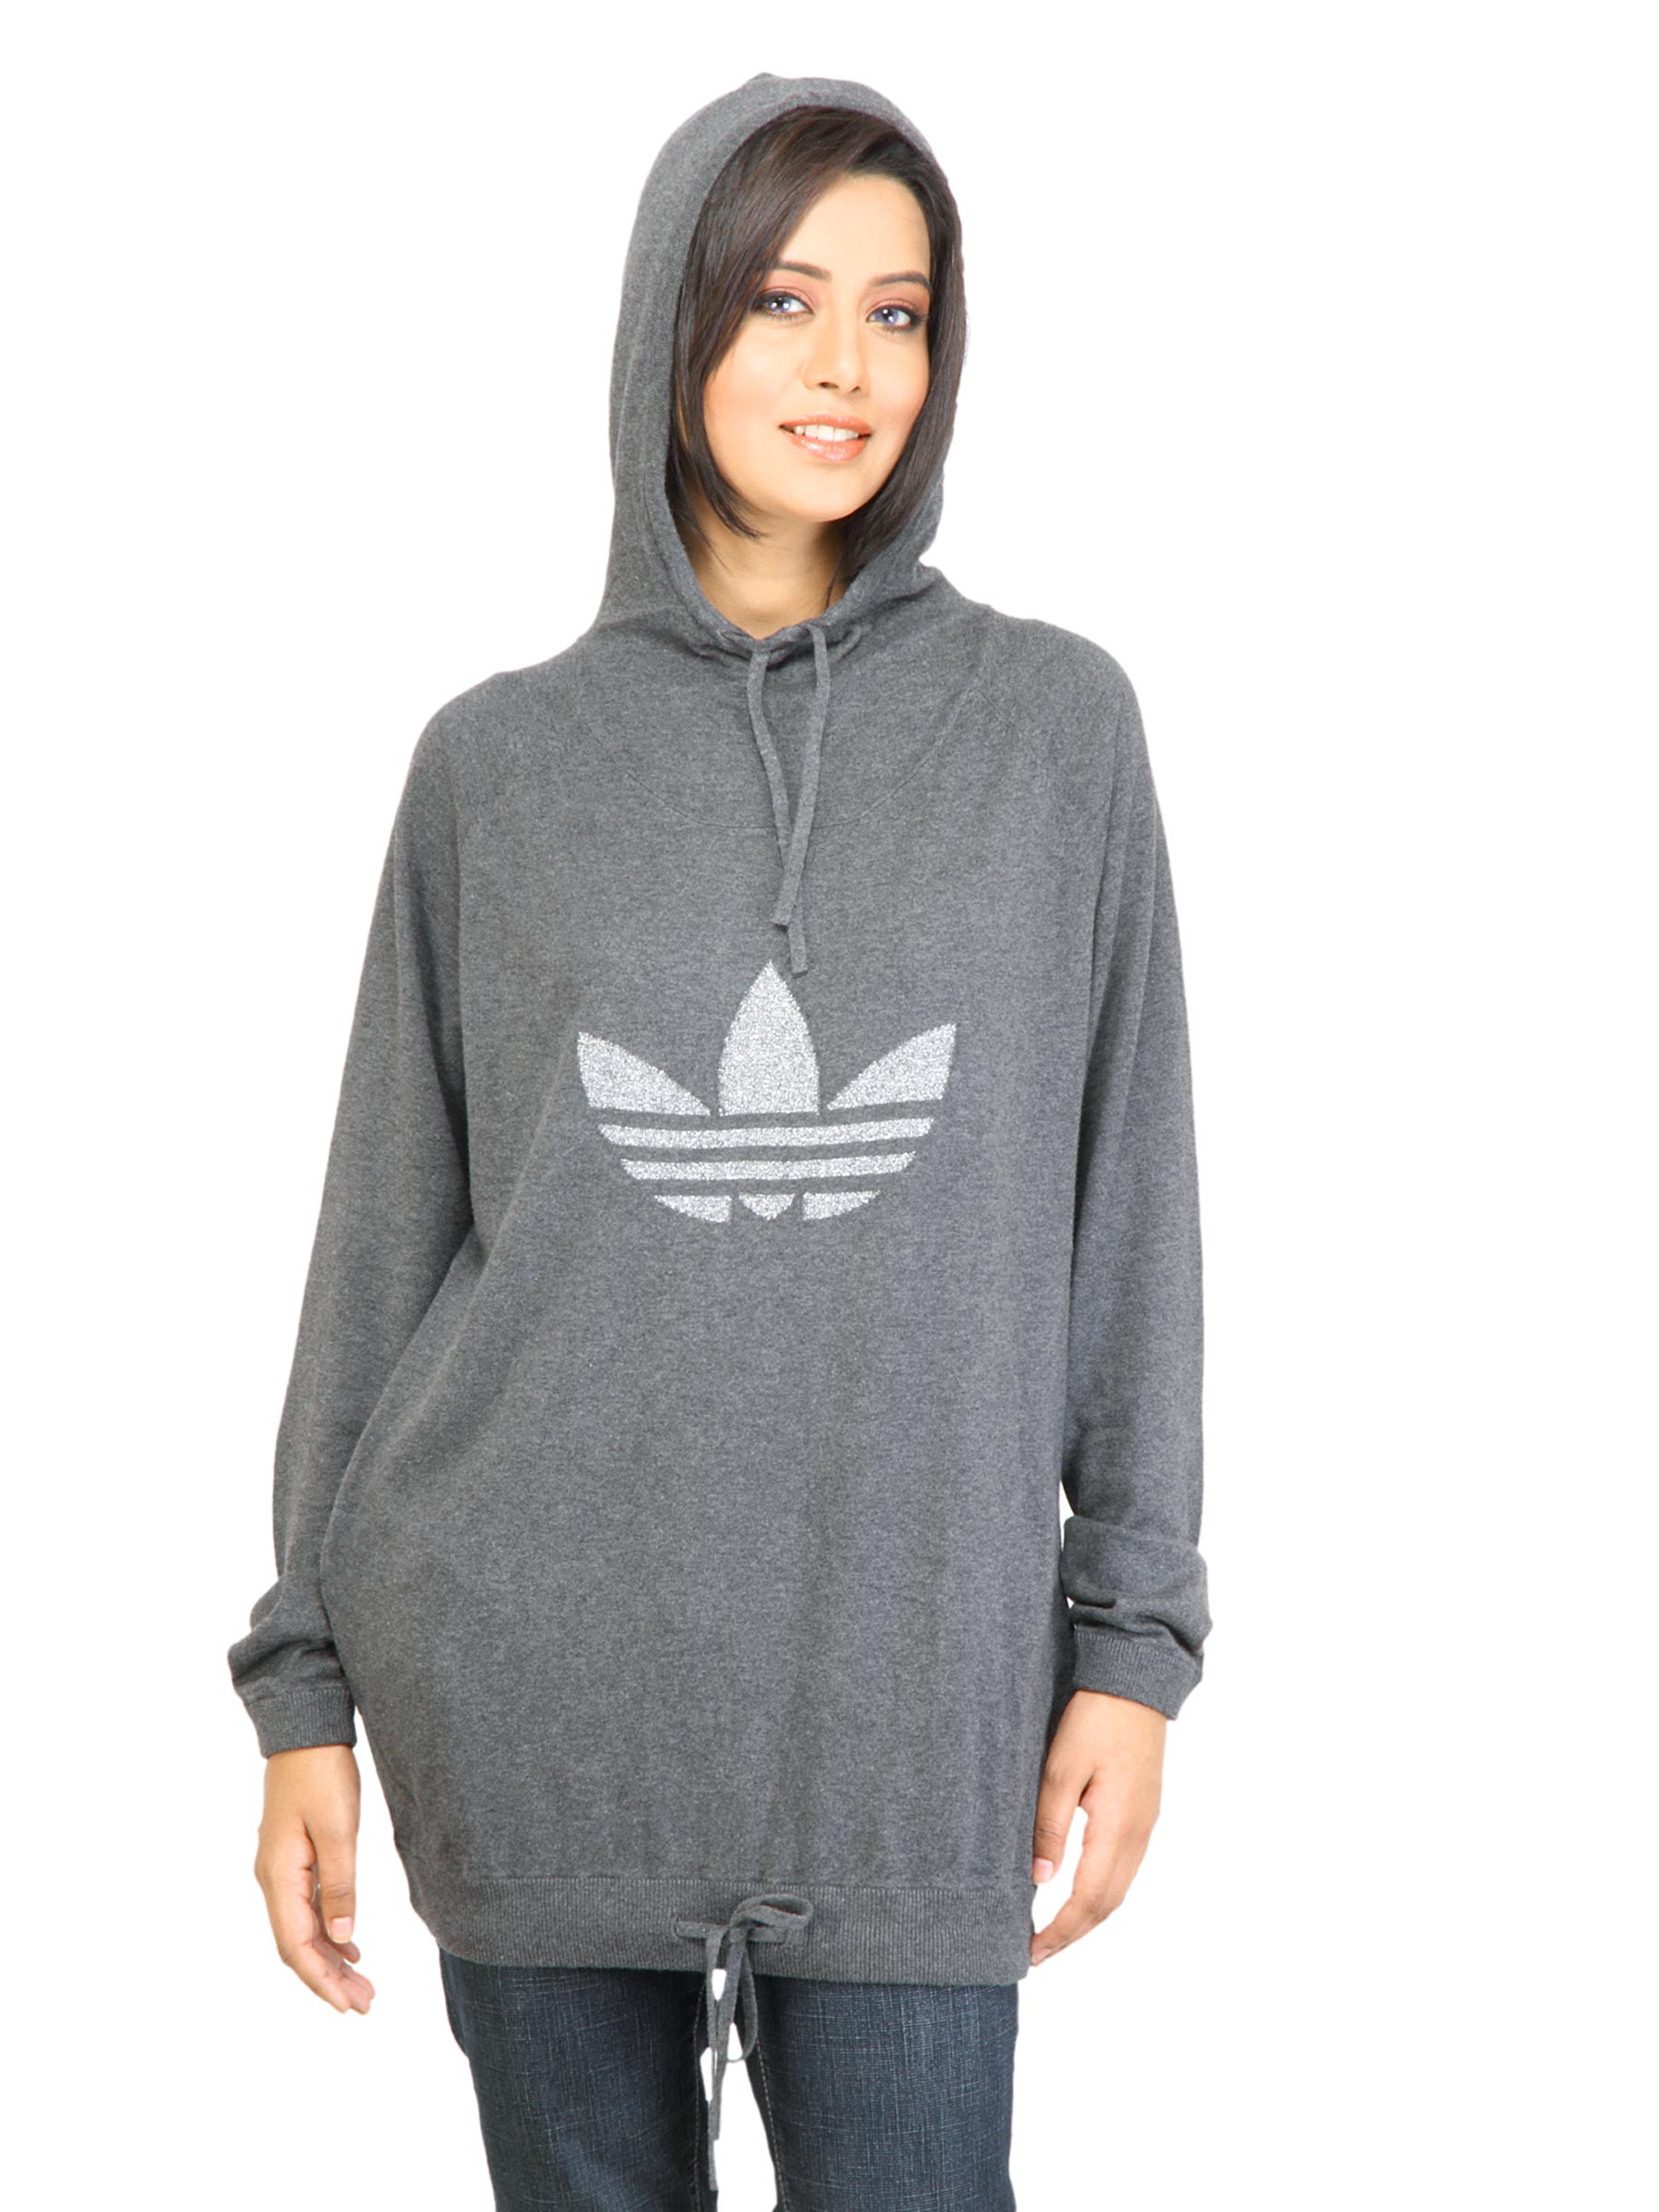 ADIDAS Originals Women F Sleek Trf Grey Sweatshirt